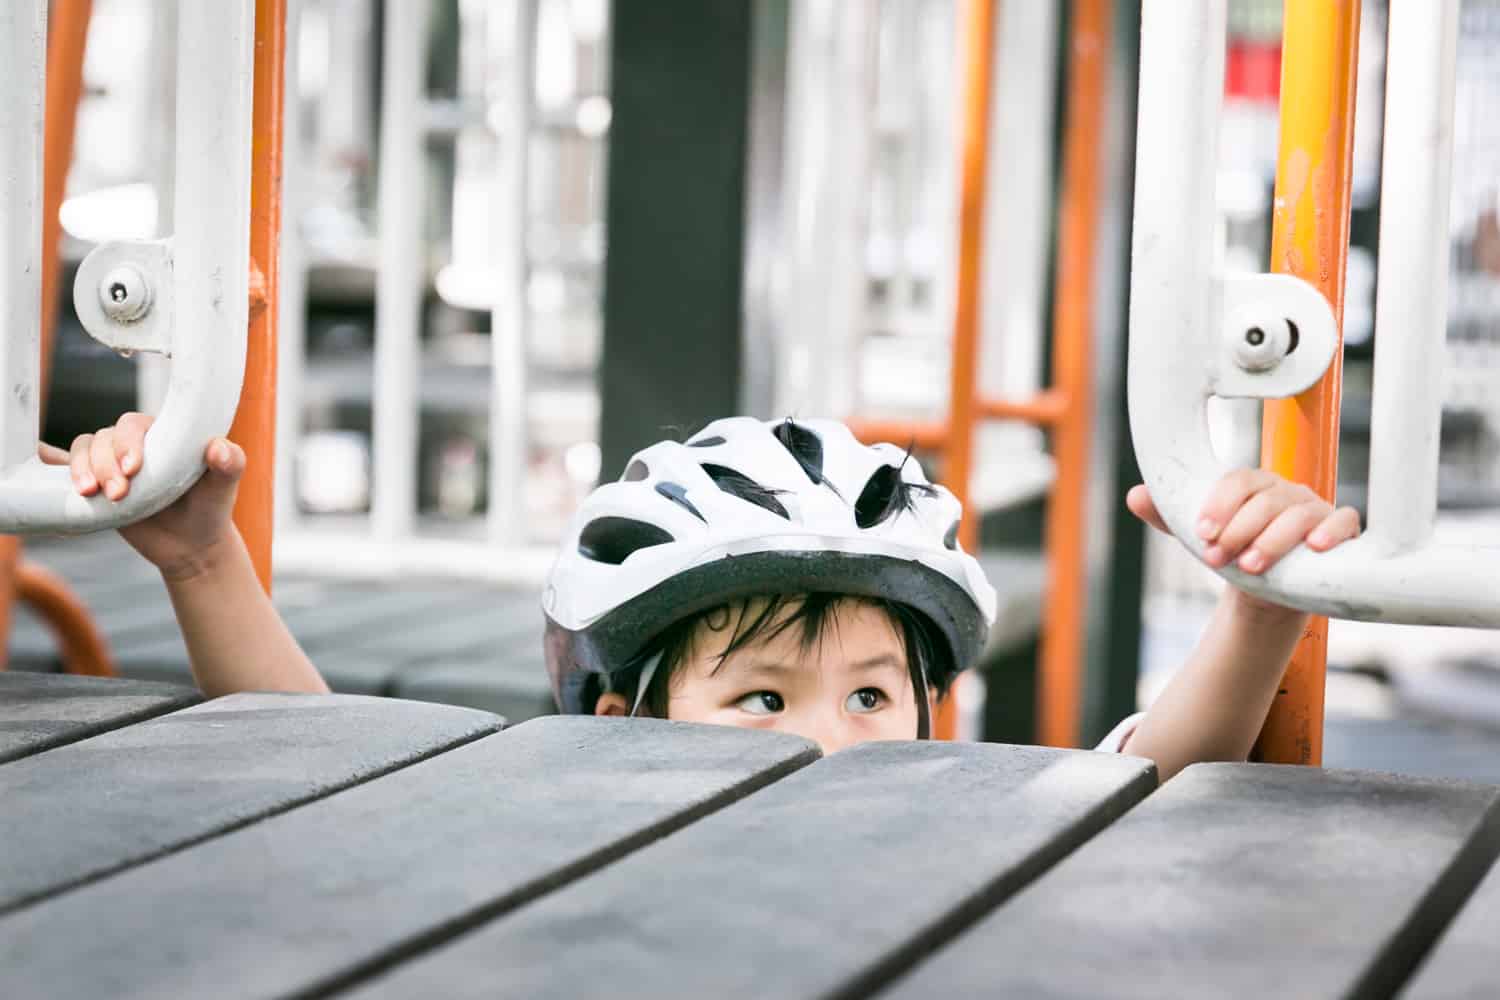 Little boy wearing bike helmet peeking over edge of playground